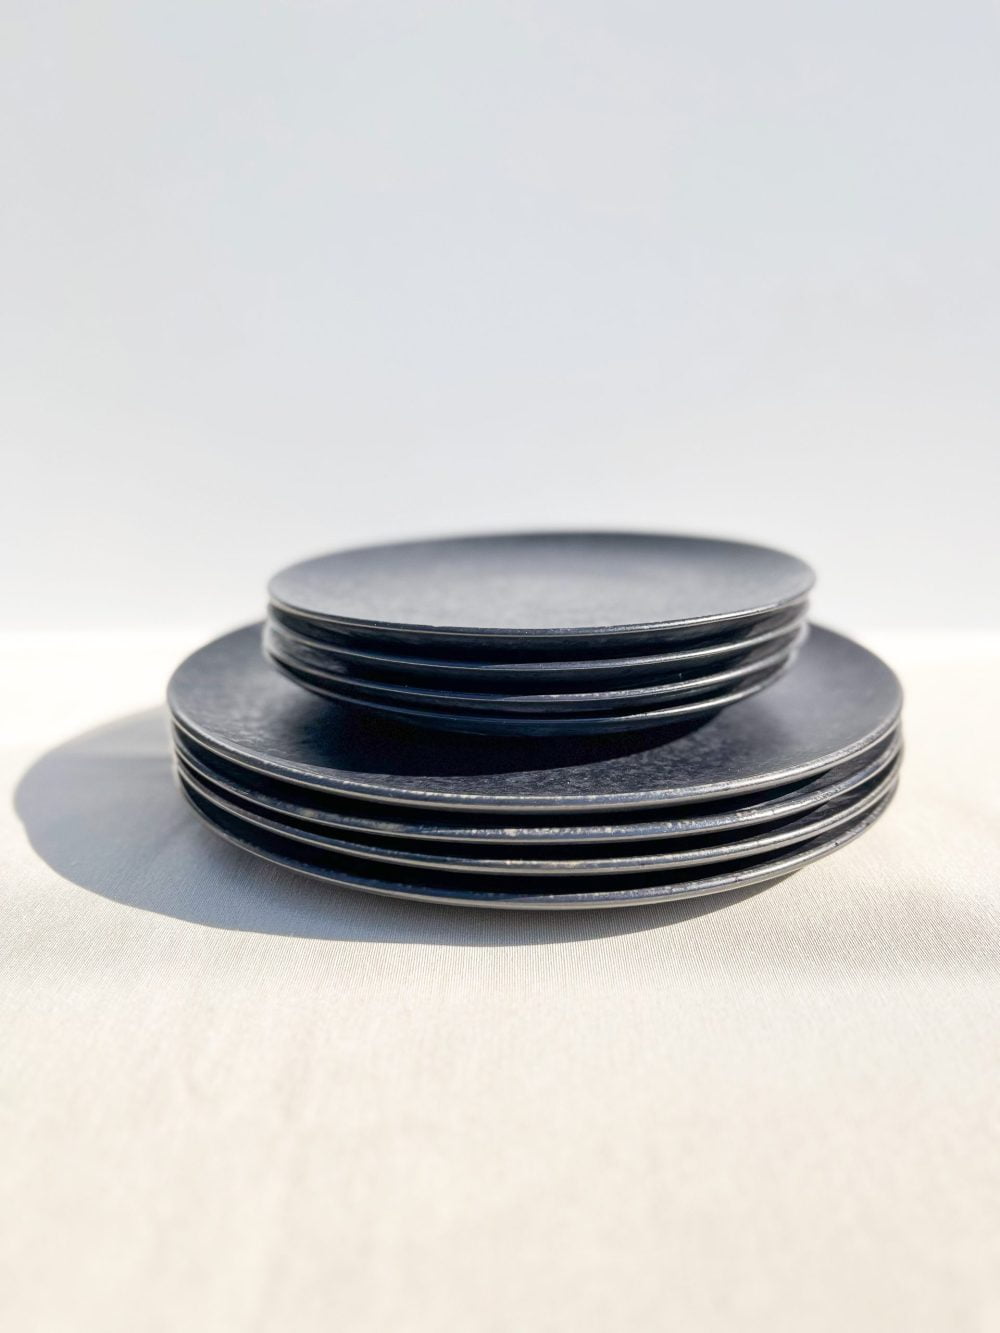 zwarte servies set borden - black stone -handgemaakt keramiek - modern portugees servies bij UNRO